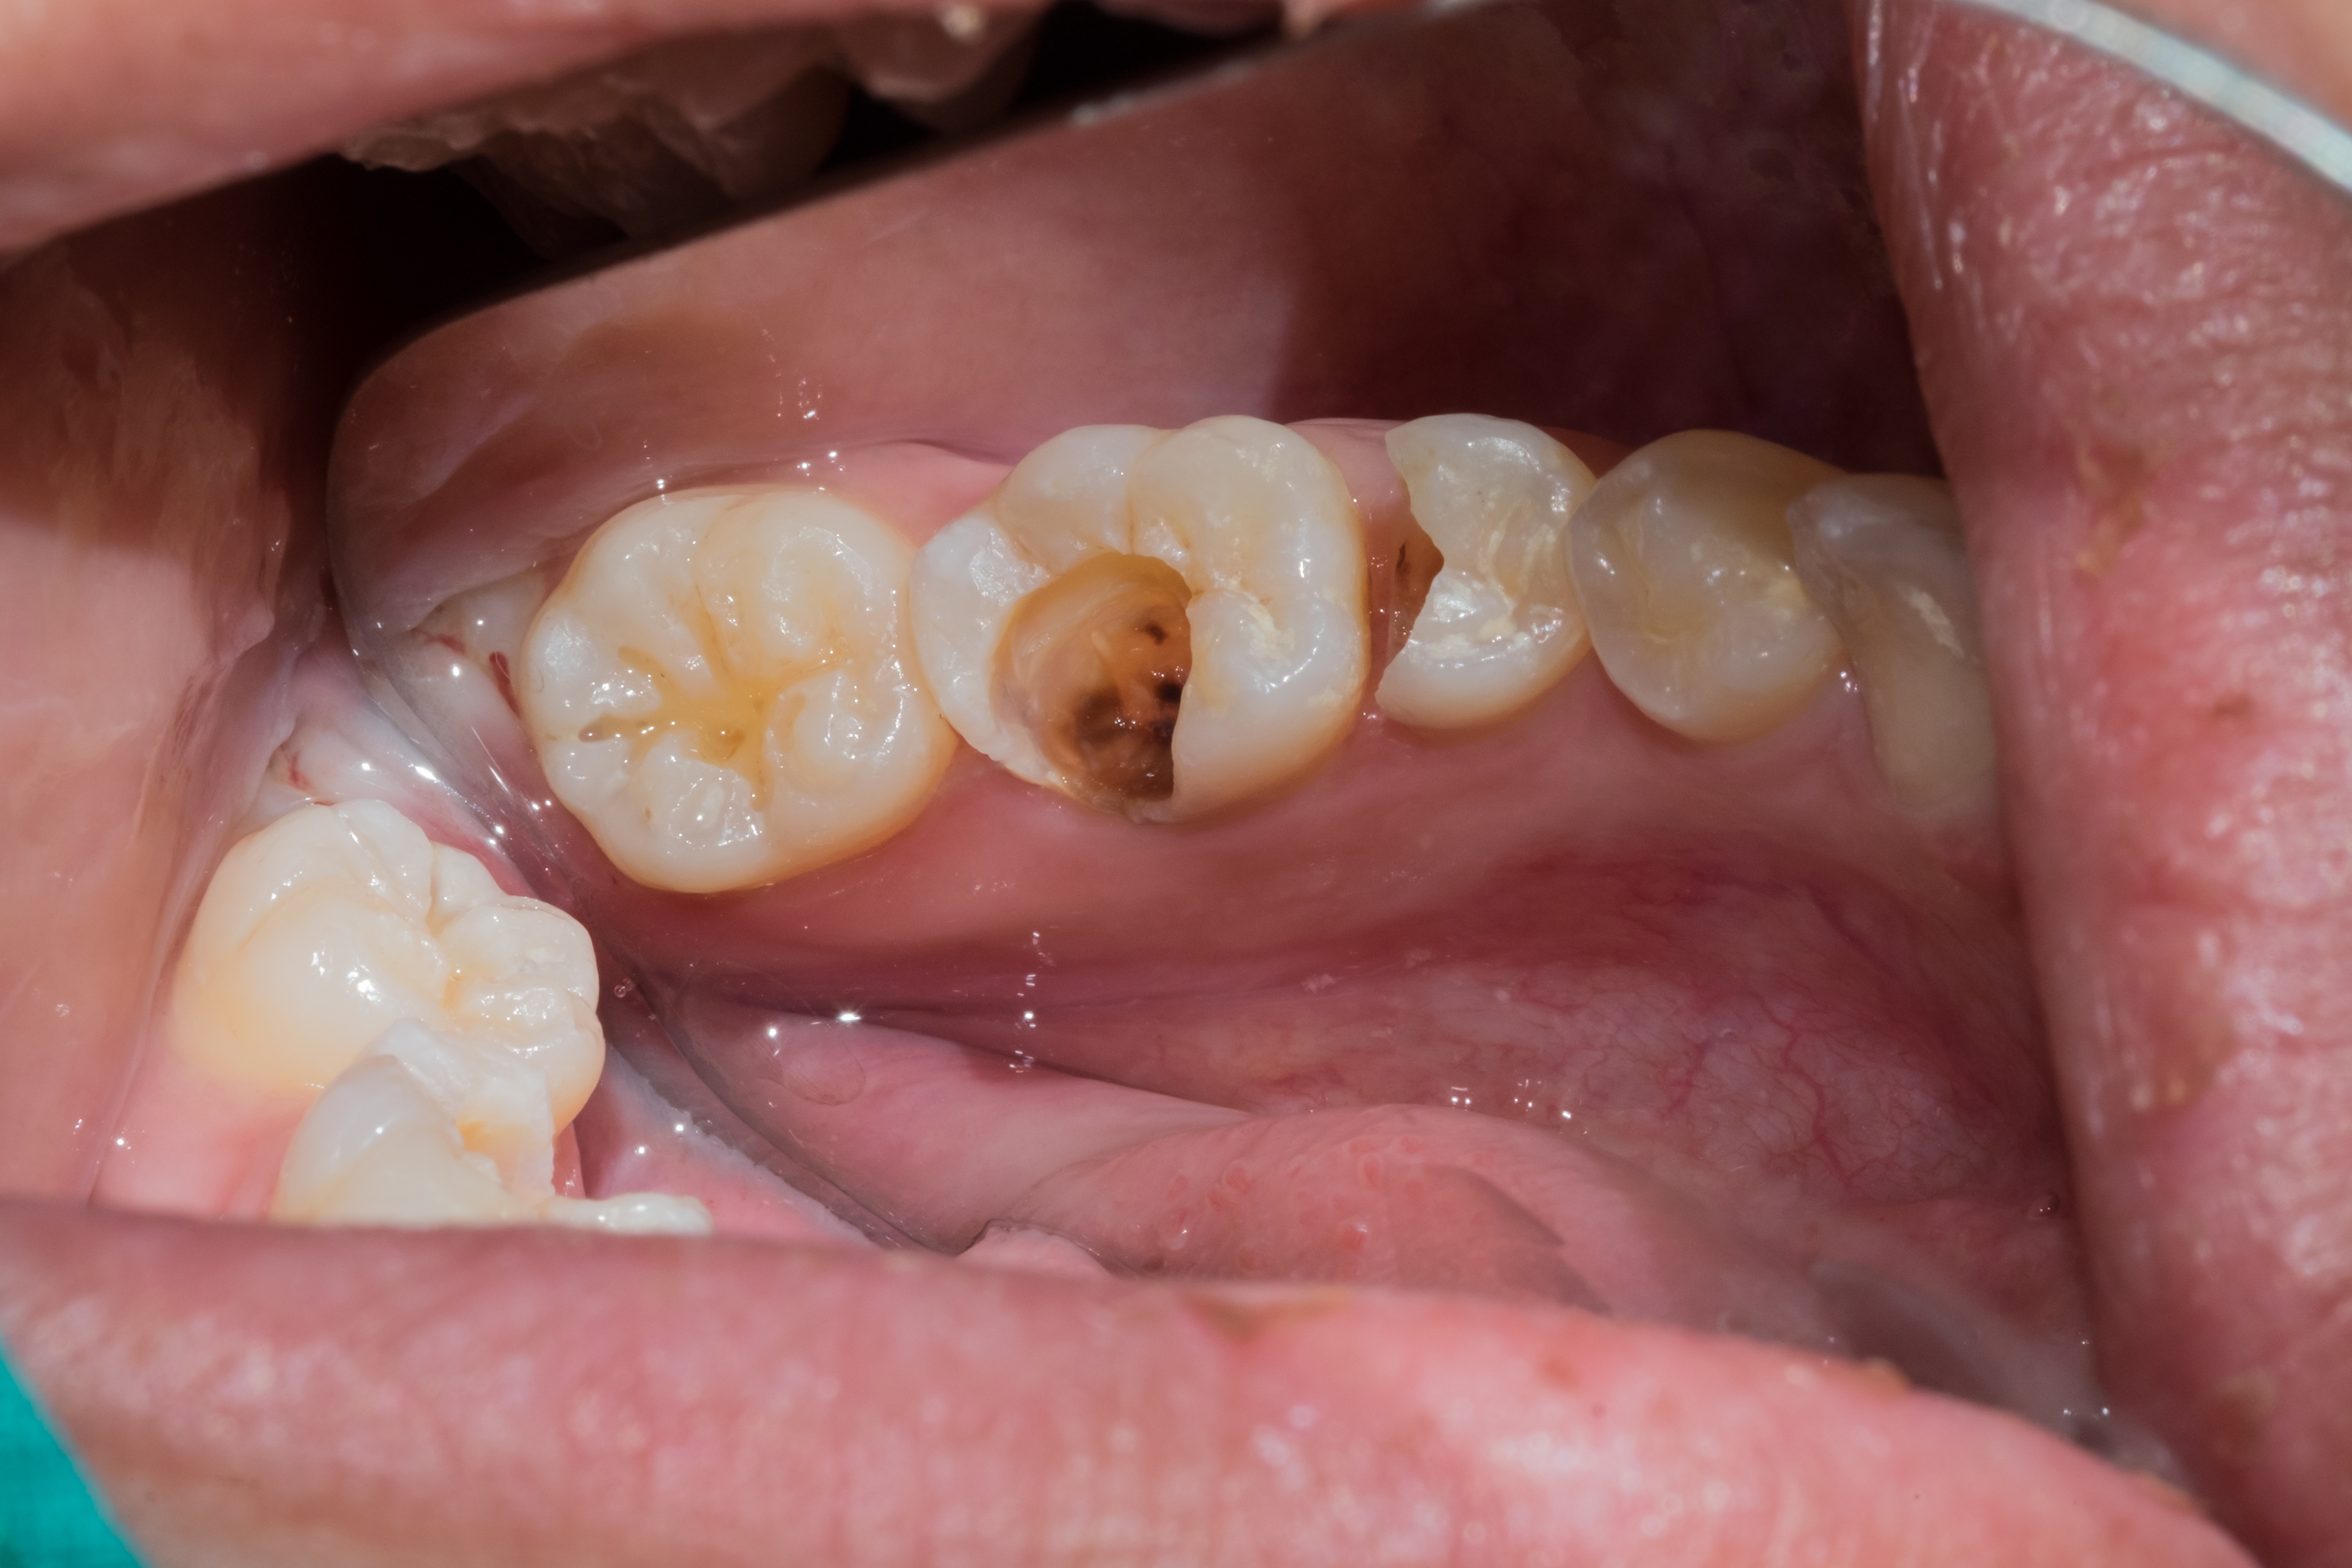 Dental Fillings and its Lifespan